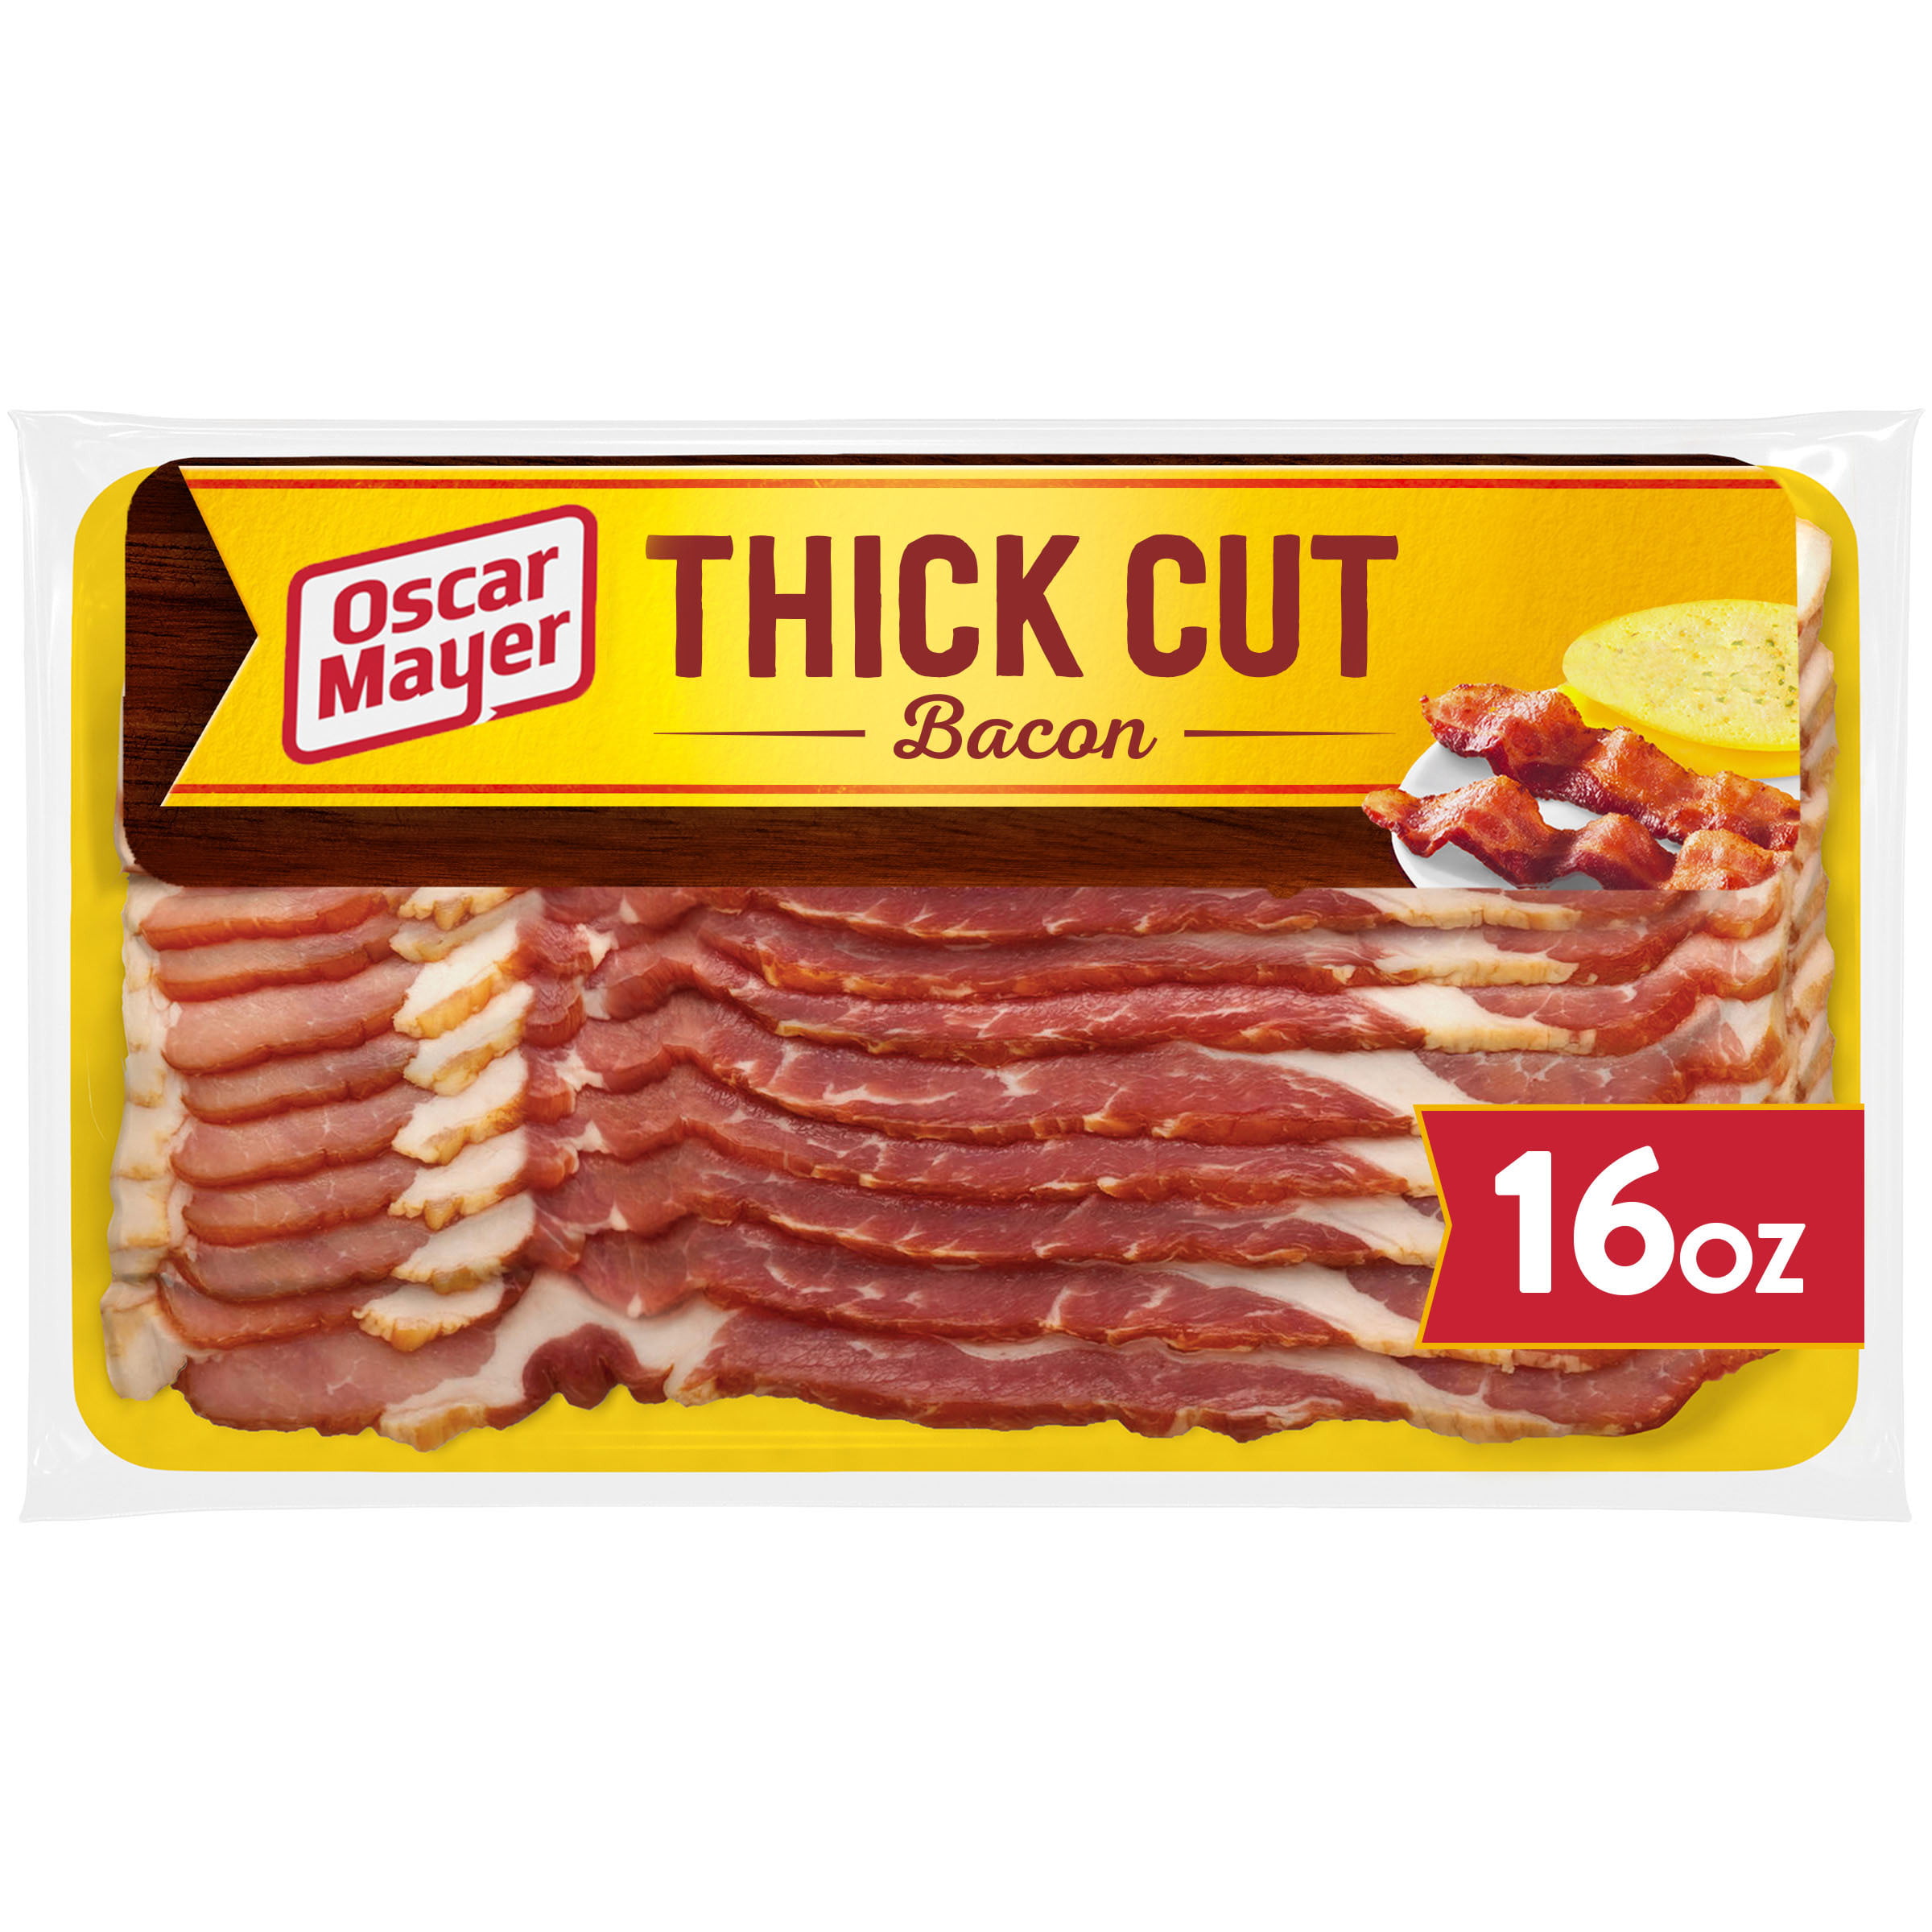 Oscar Mayer Naturally Hardwood Smoked Thick Cut Bacon, 16